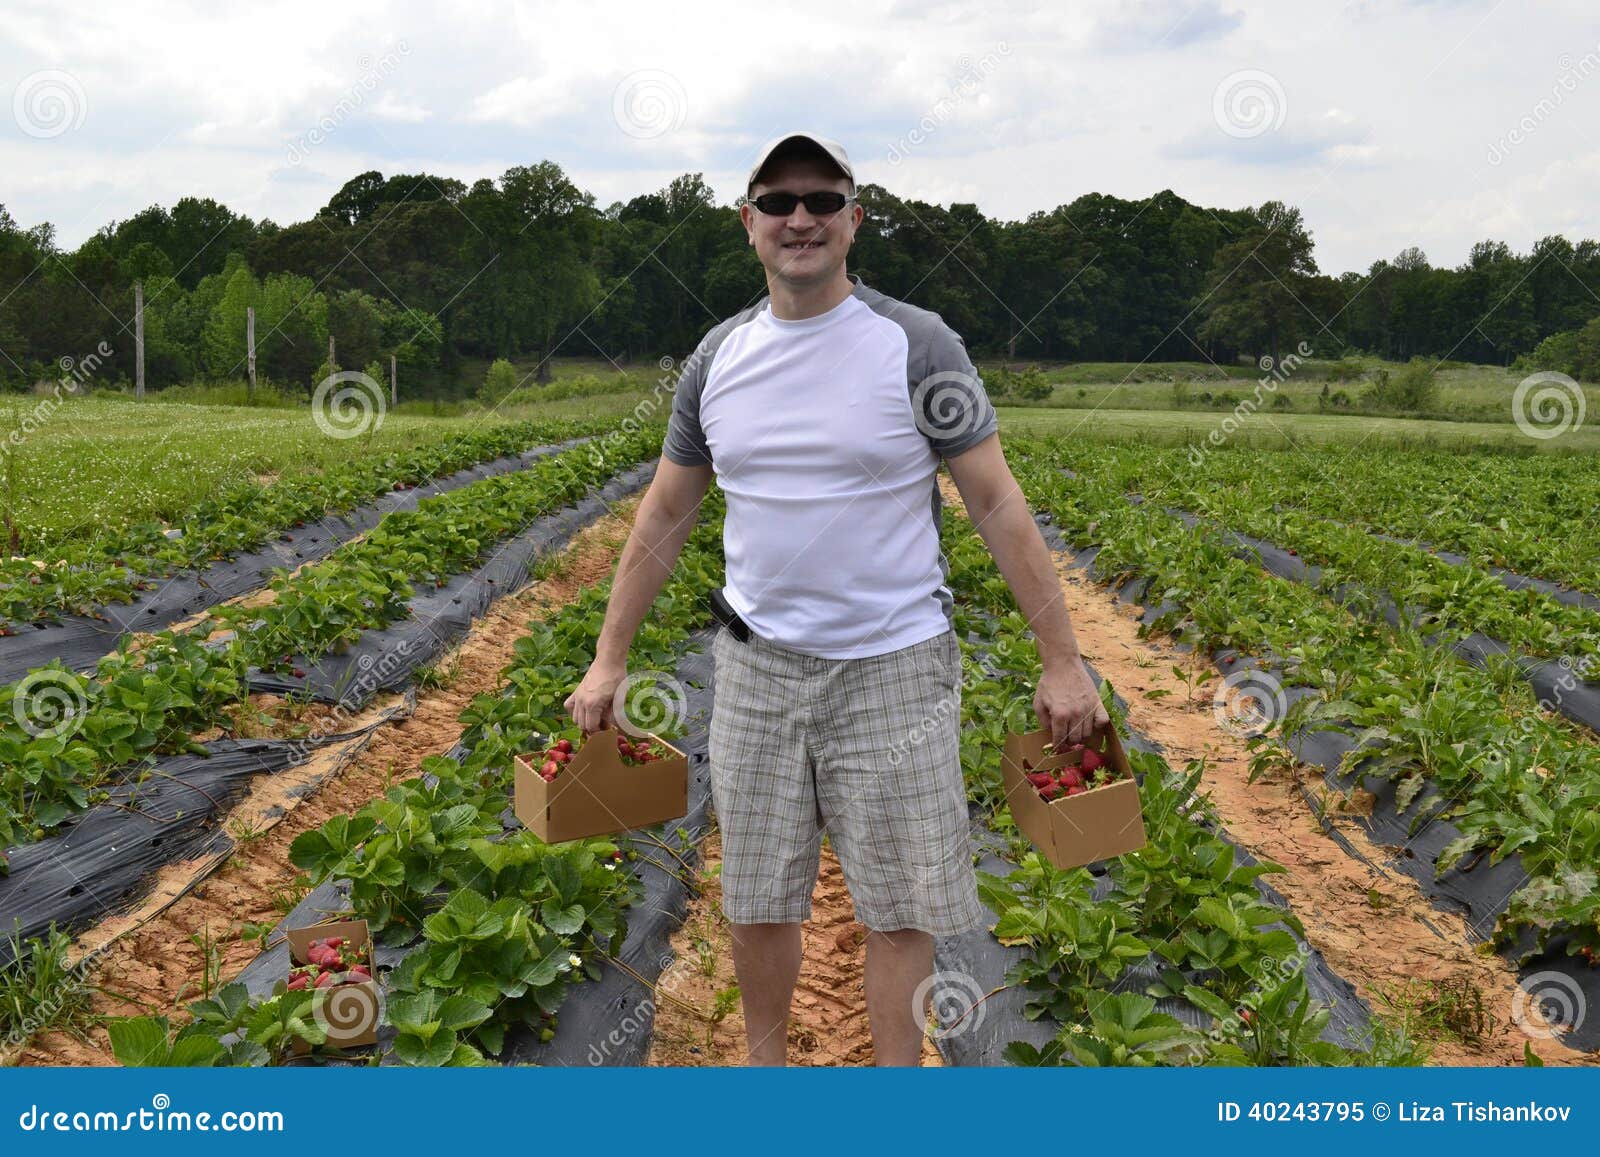 man stood in strawberry fields